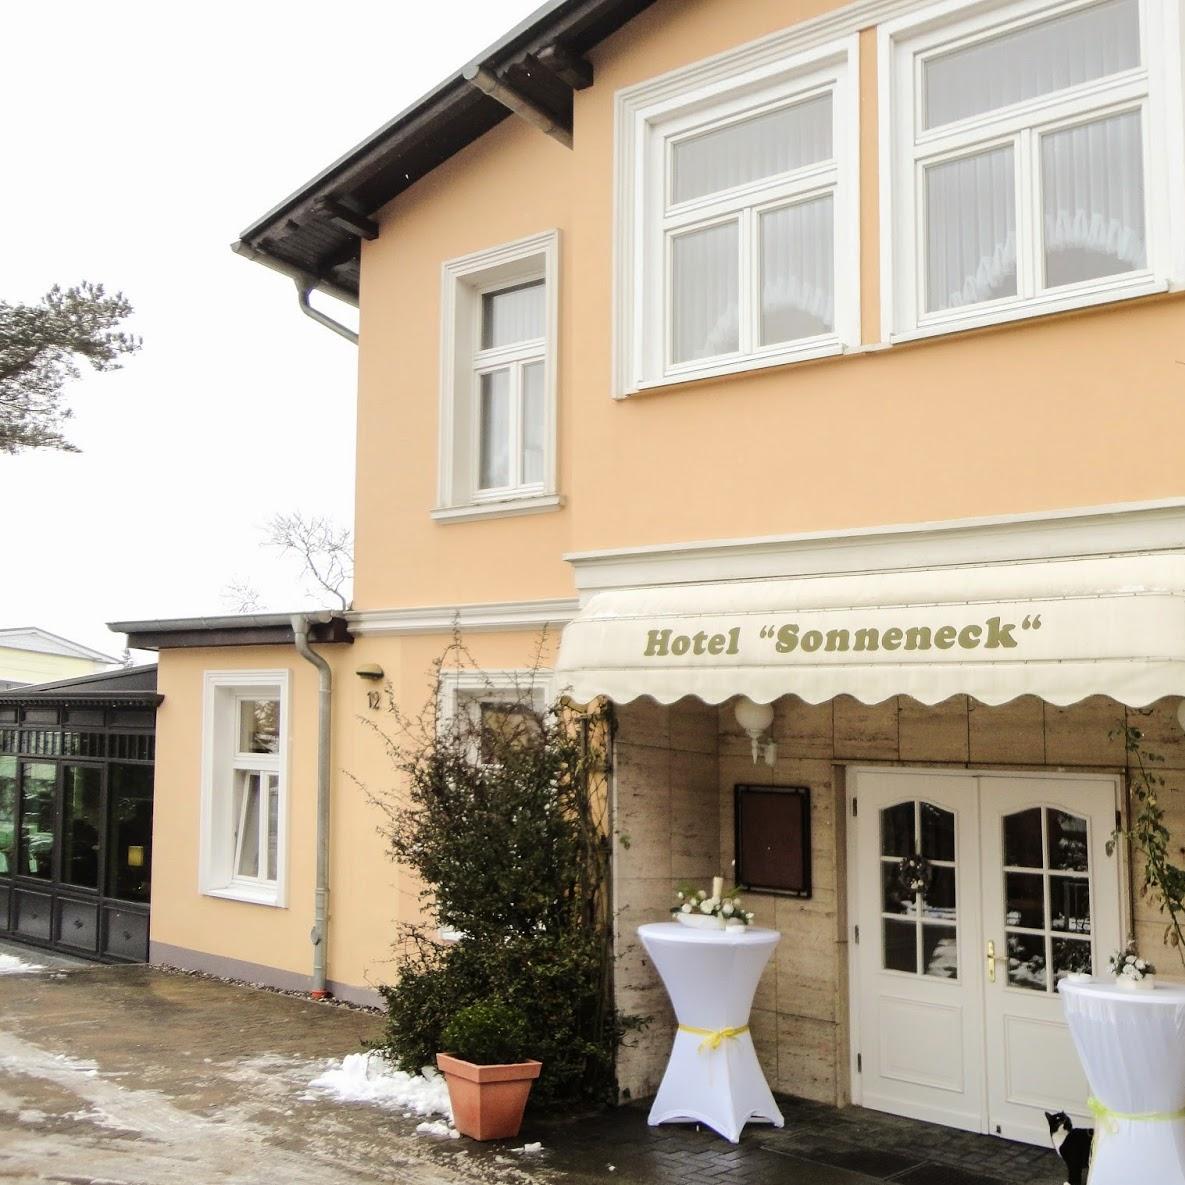 Restaurant "Hotel Sonneneck" in Zinnowitz